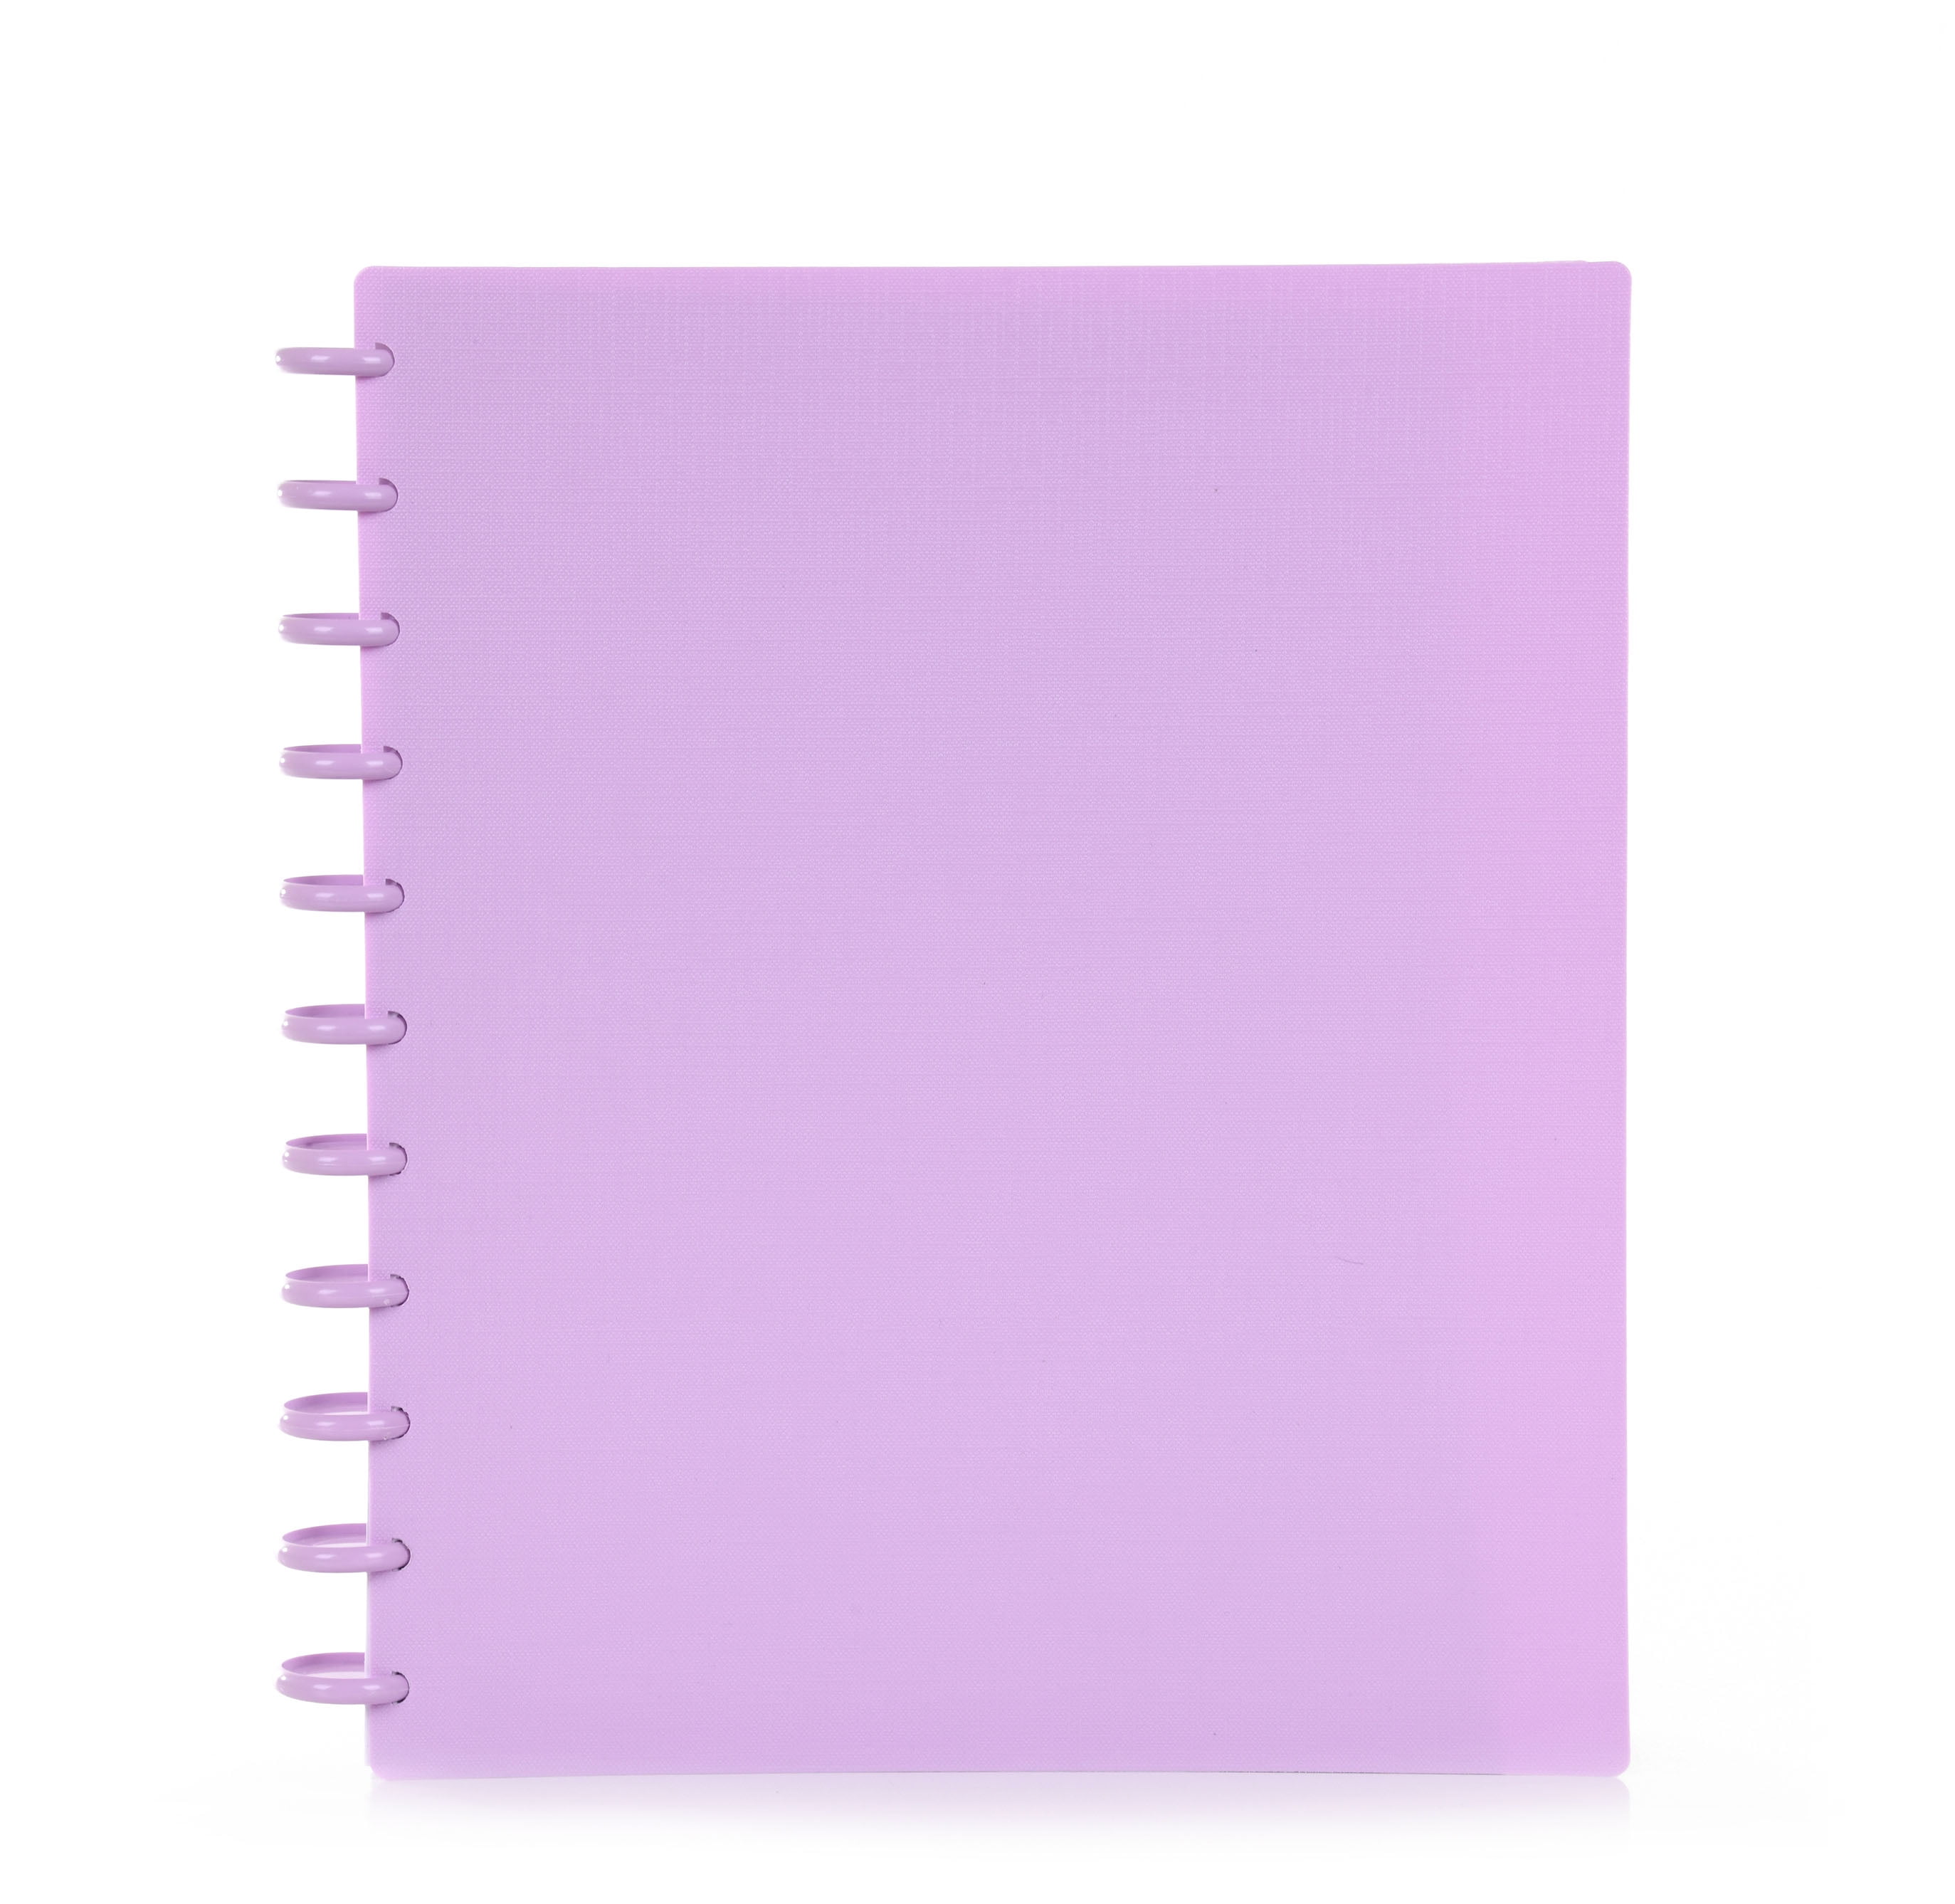 Discs Spring Pink, 1Inch Talia Discbound Notebook 